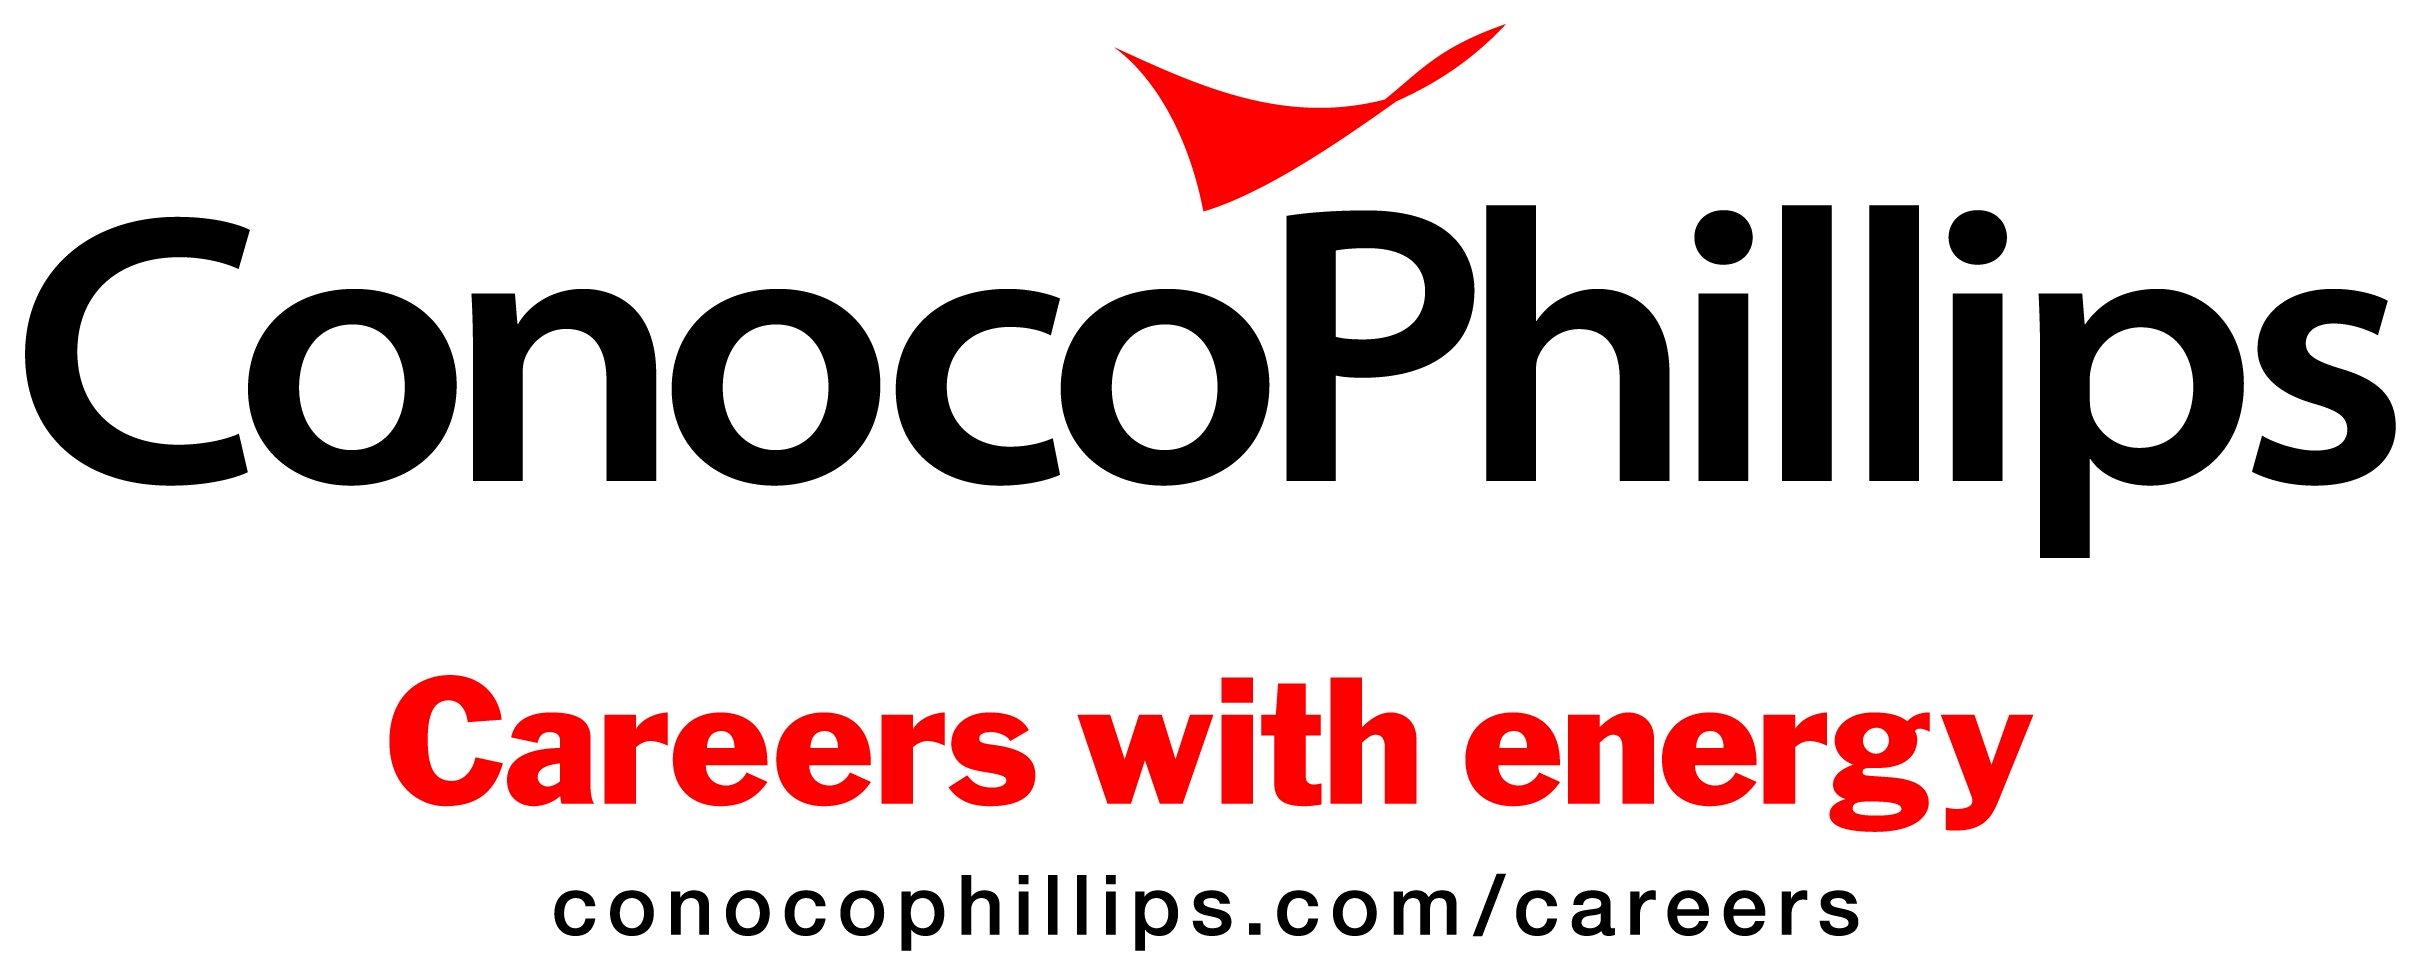 ConocoPhillips-LOGO